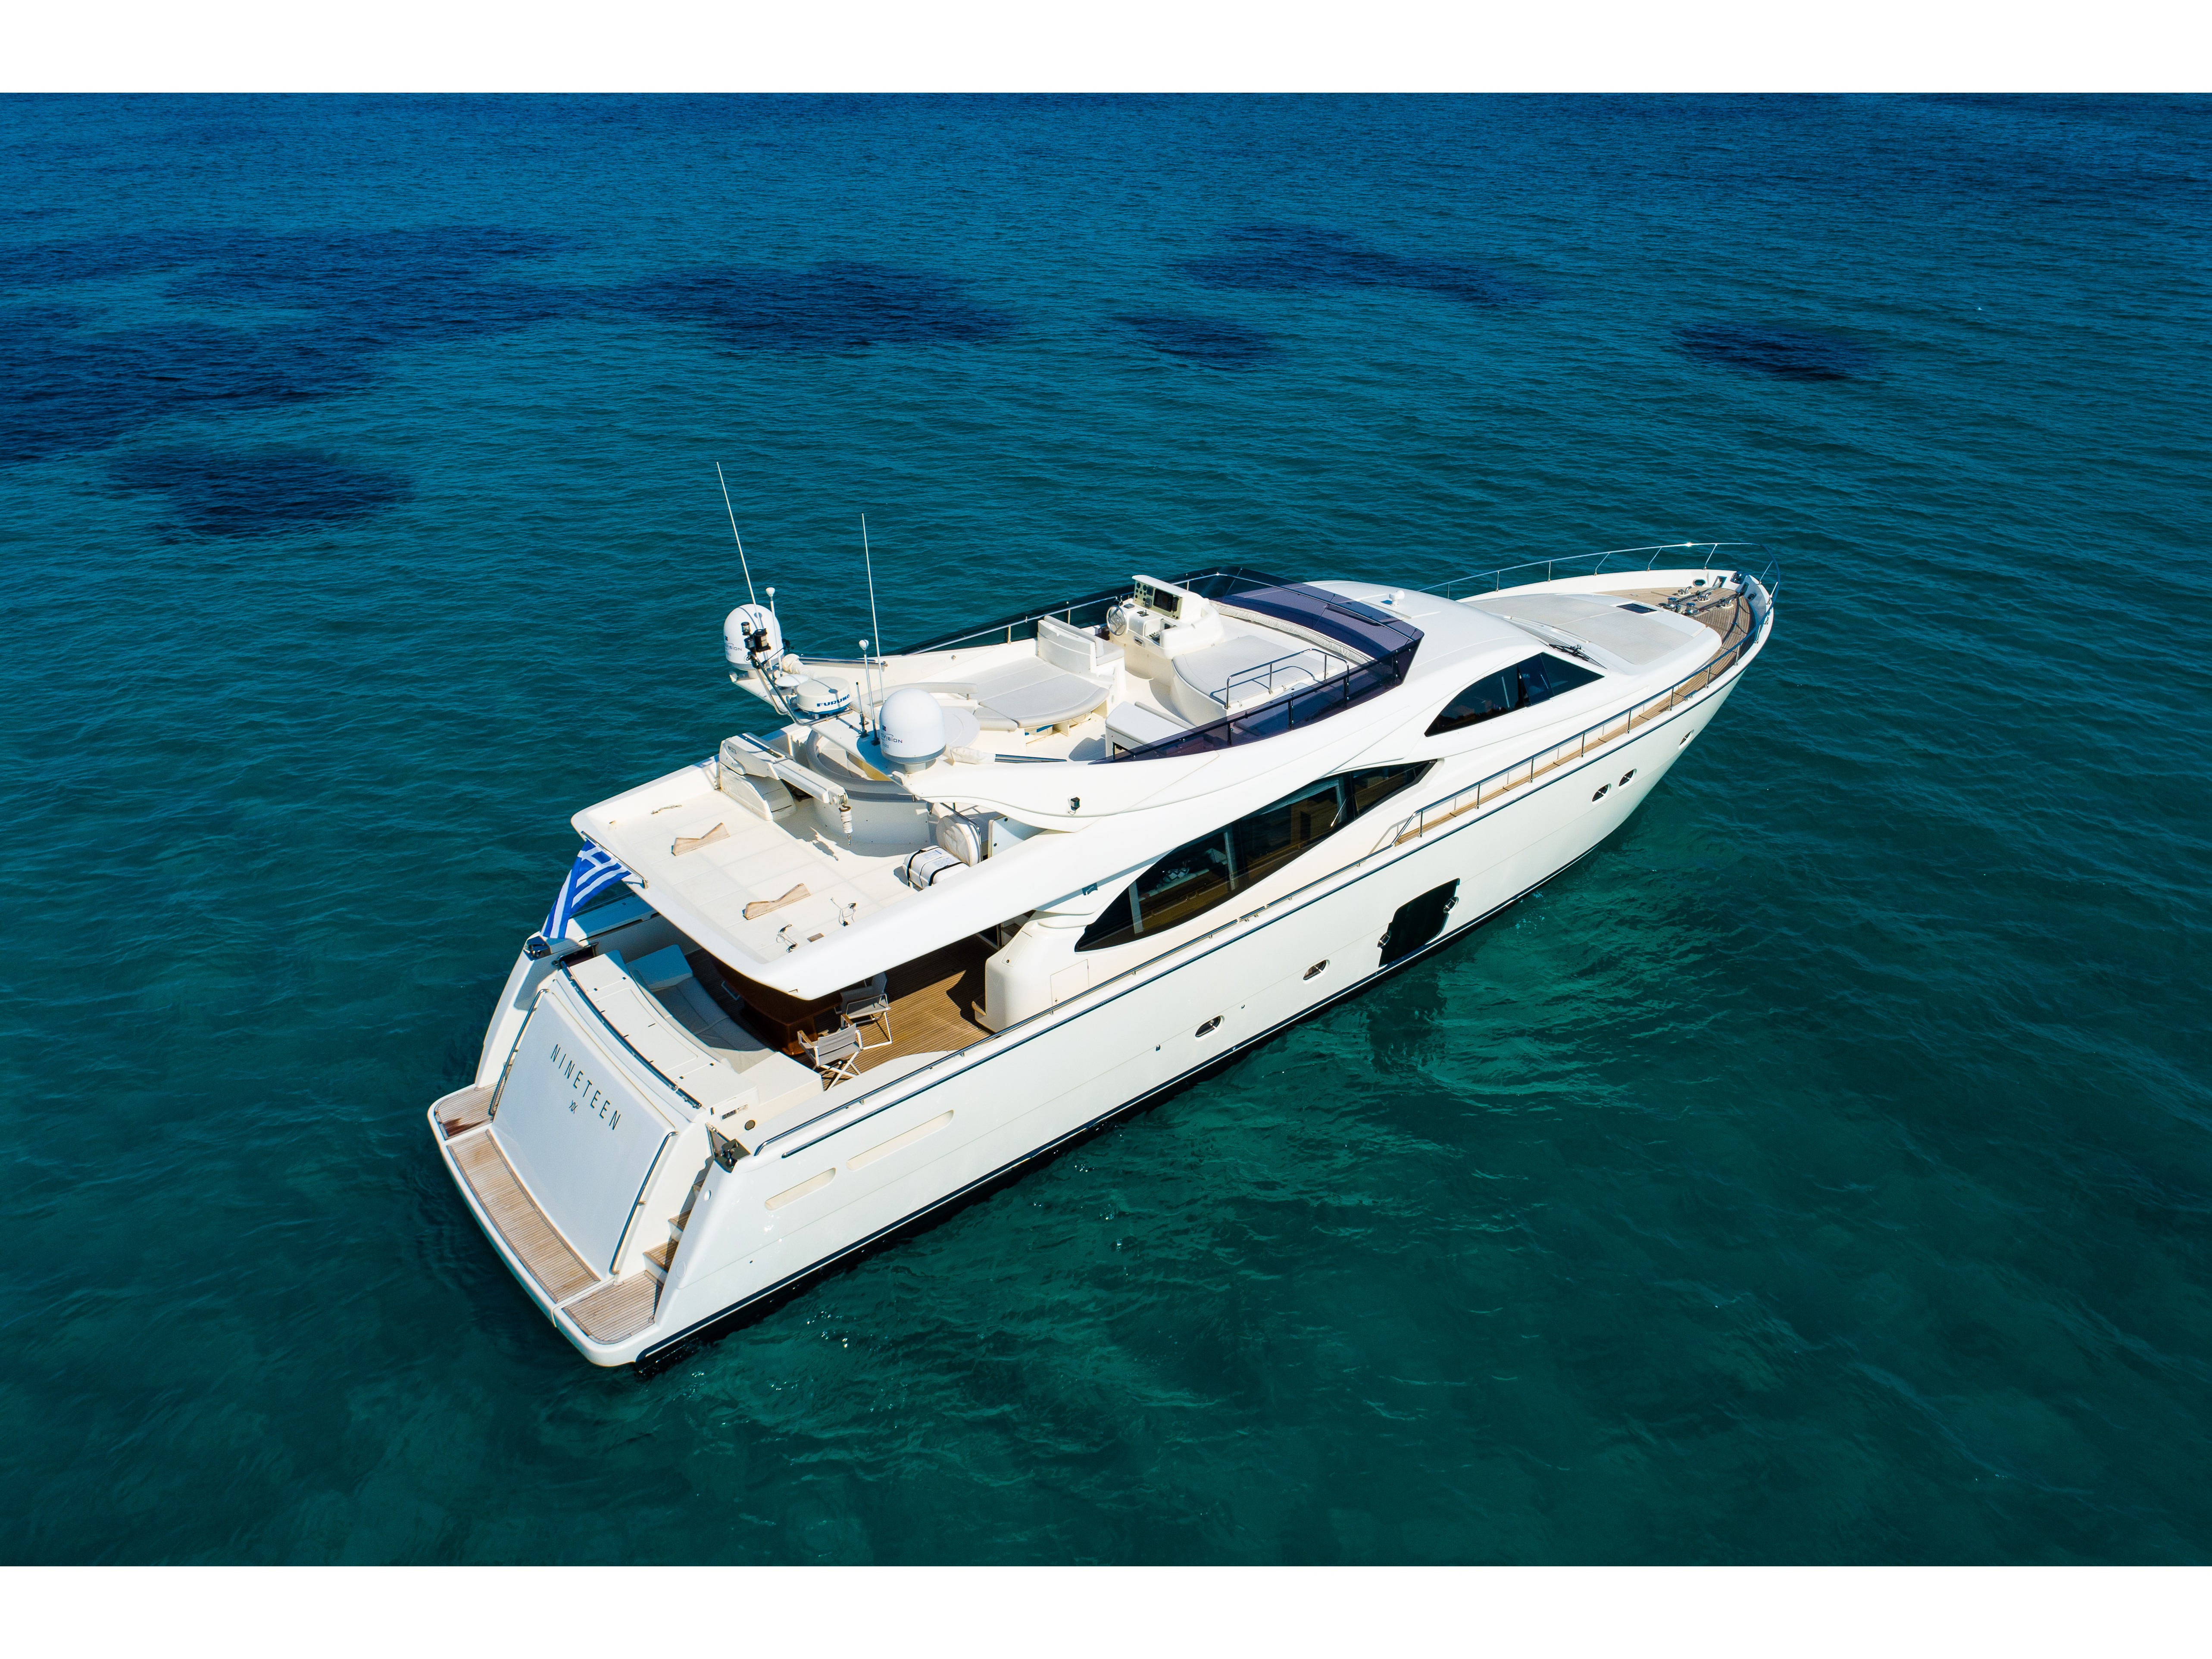 Ferretti 780 - Location de Superyacht dans le Monde Entier & Boat hire in Greece Athens and Saronic Gulf Athens Hellinikon Agios Kosmas Marina 1